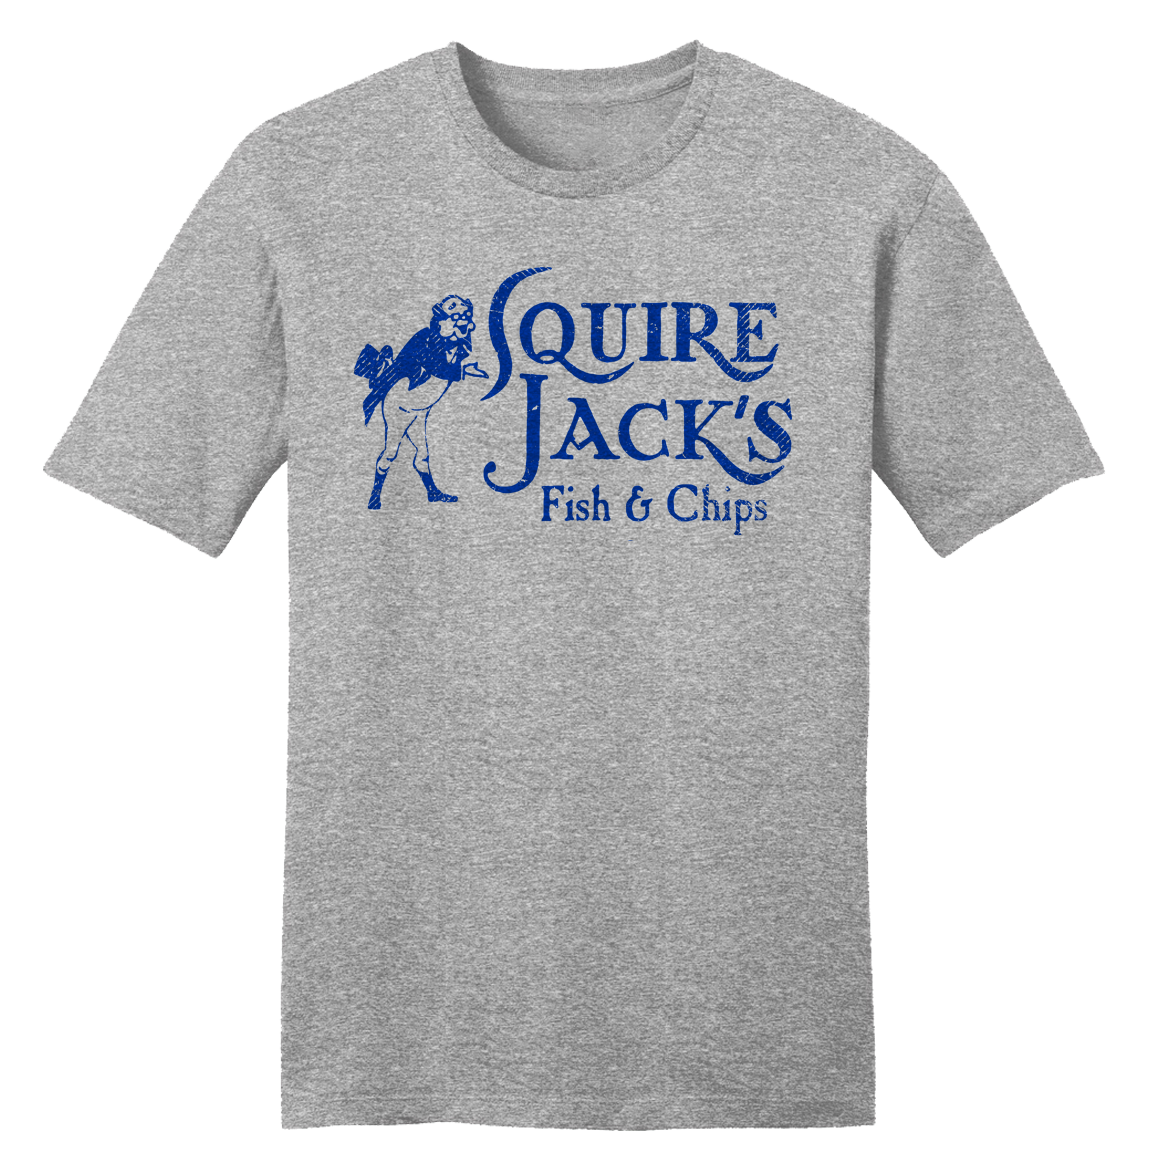 Squire Jack's tee